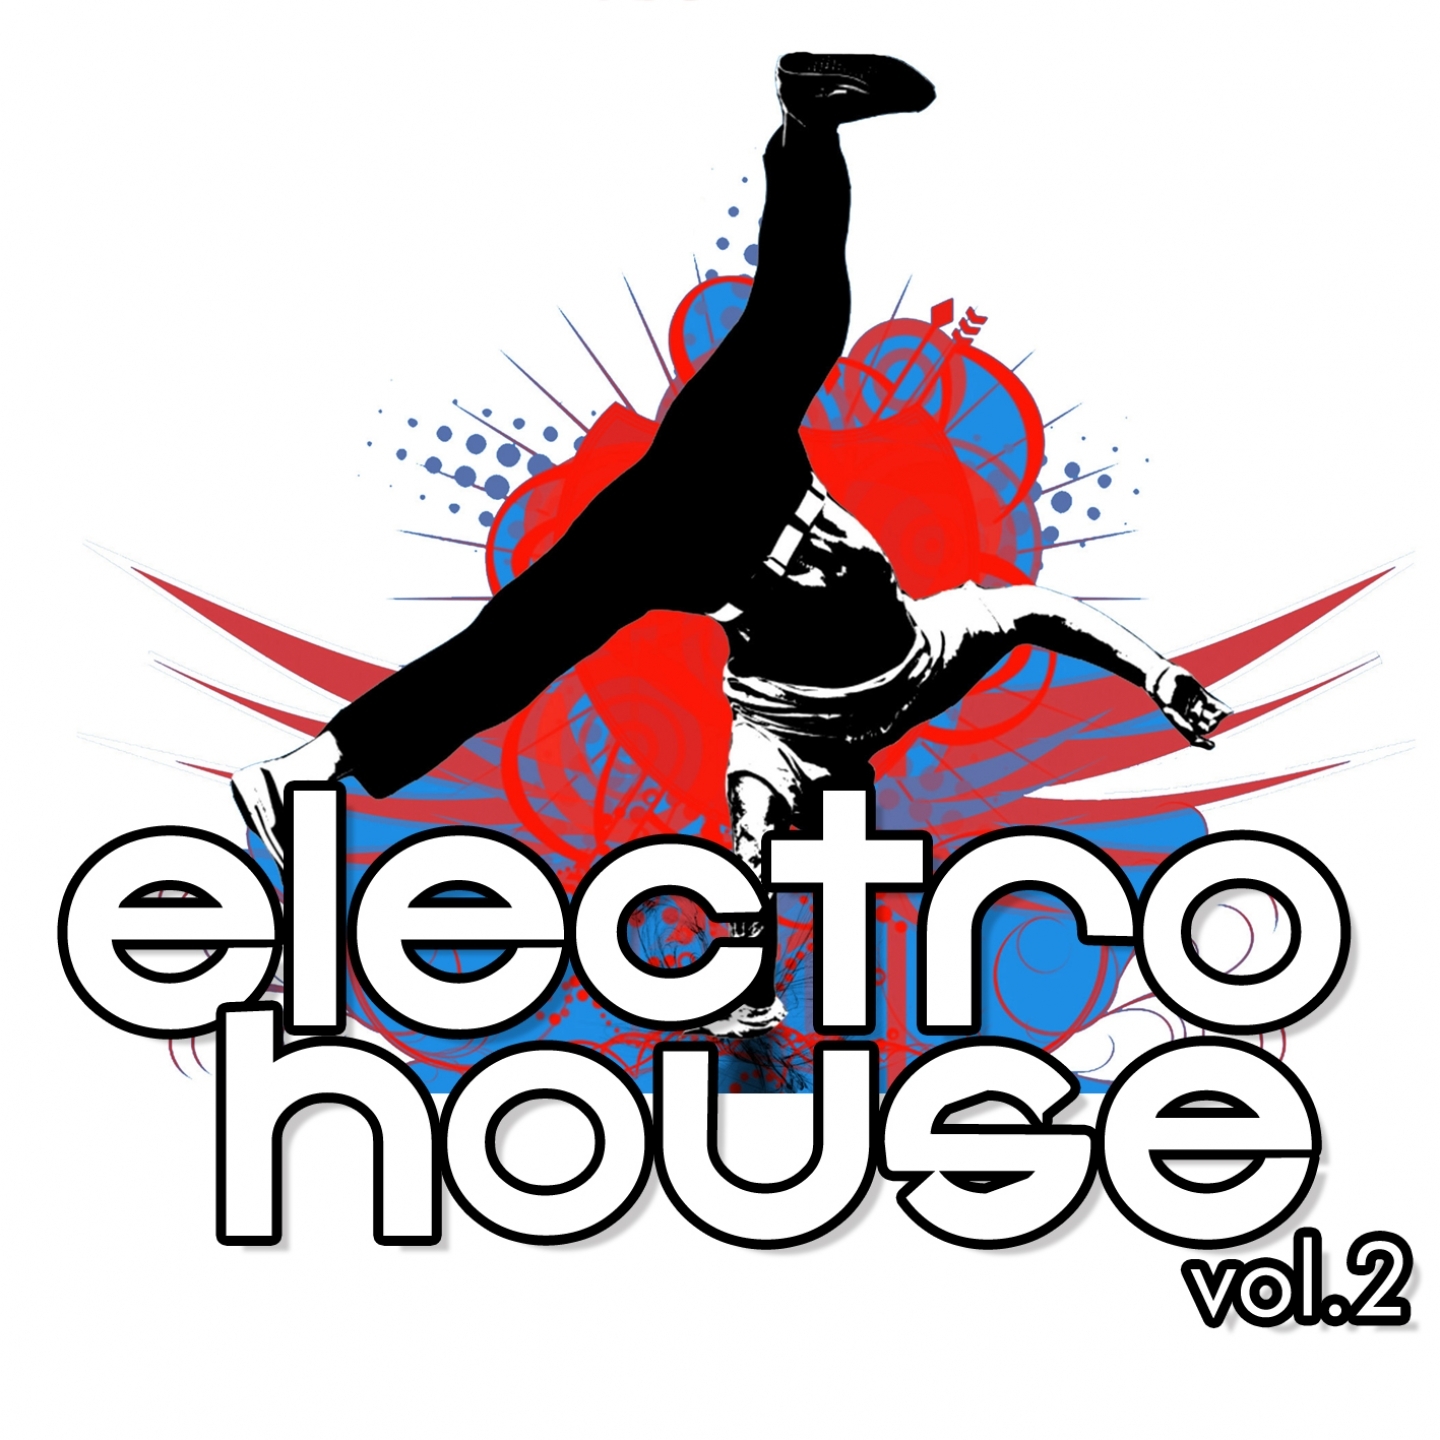 futureaudio presents Electro House Volume 2